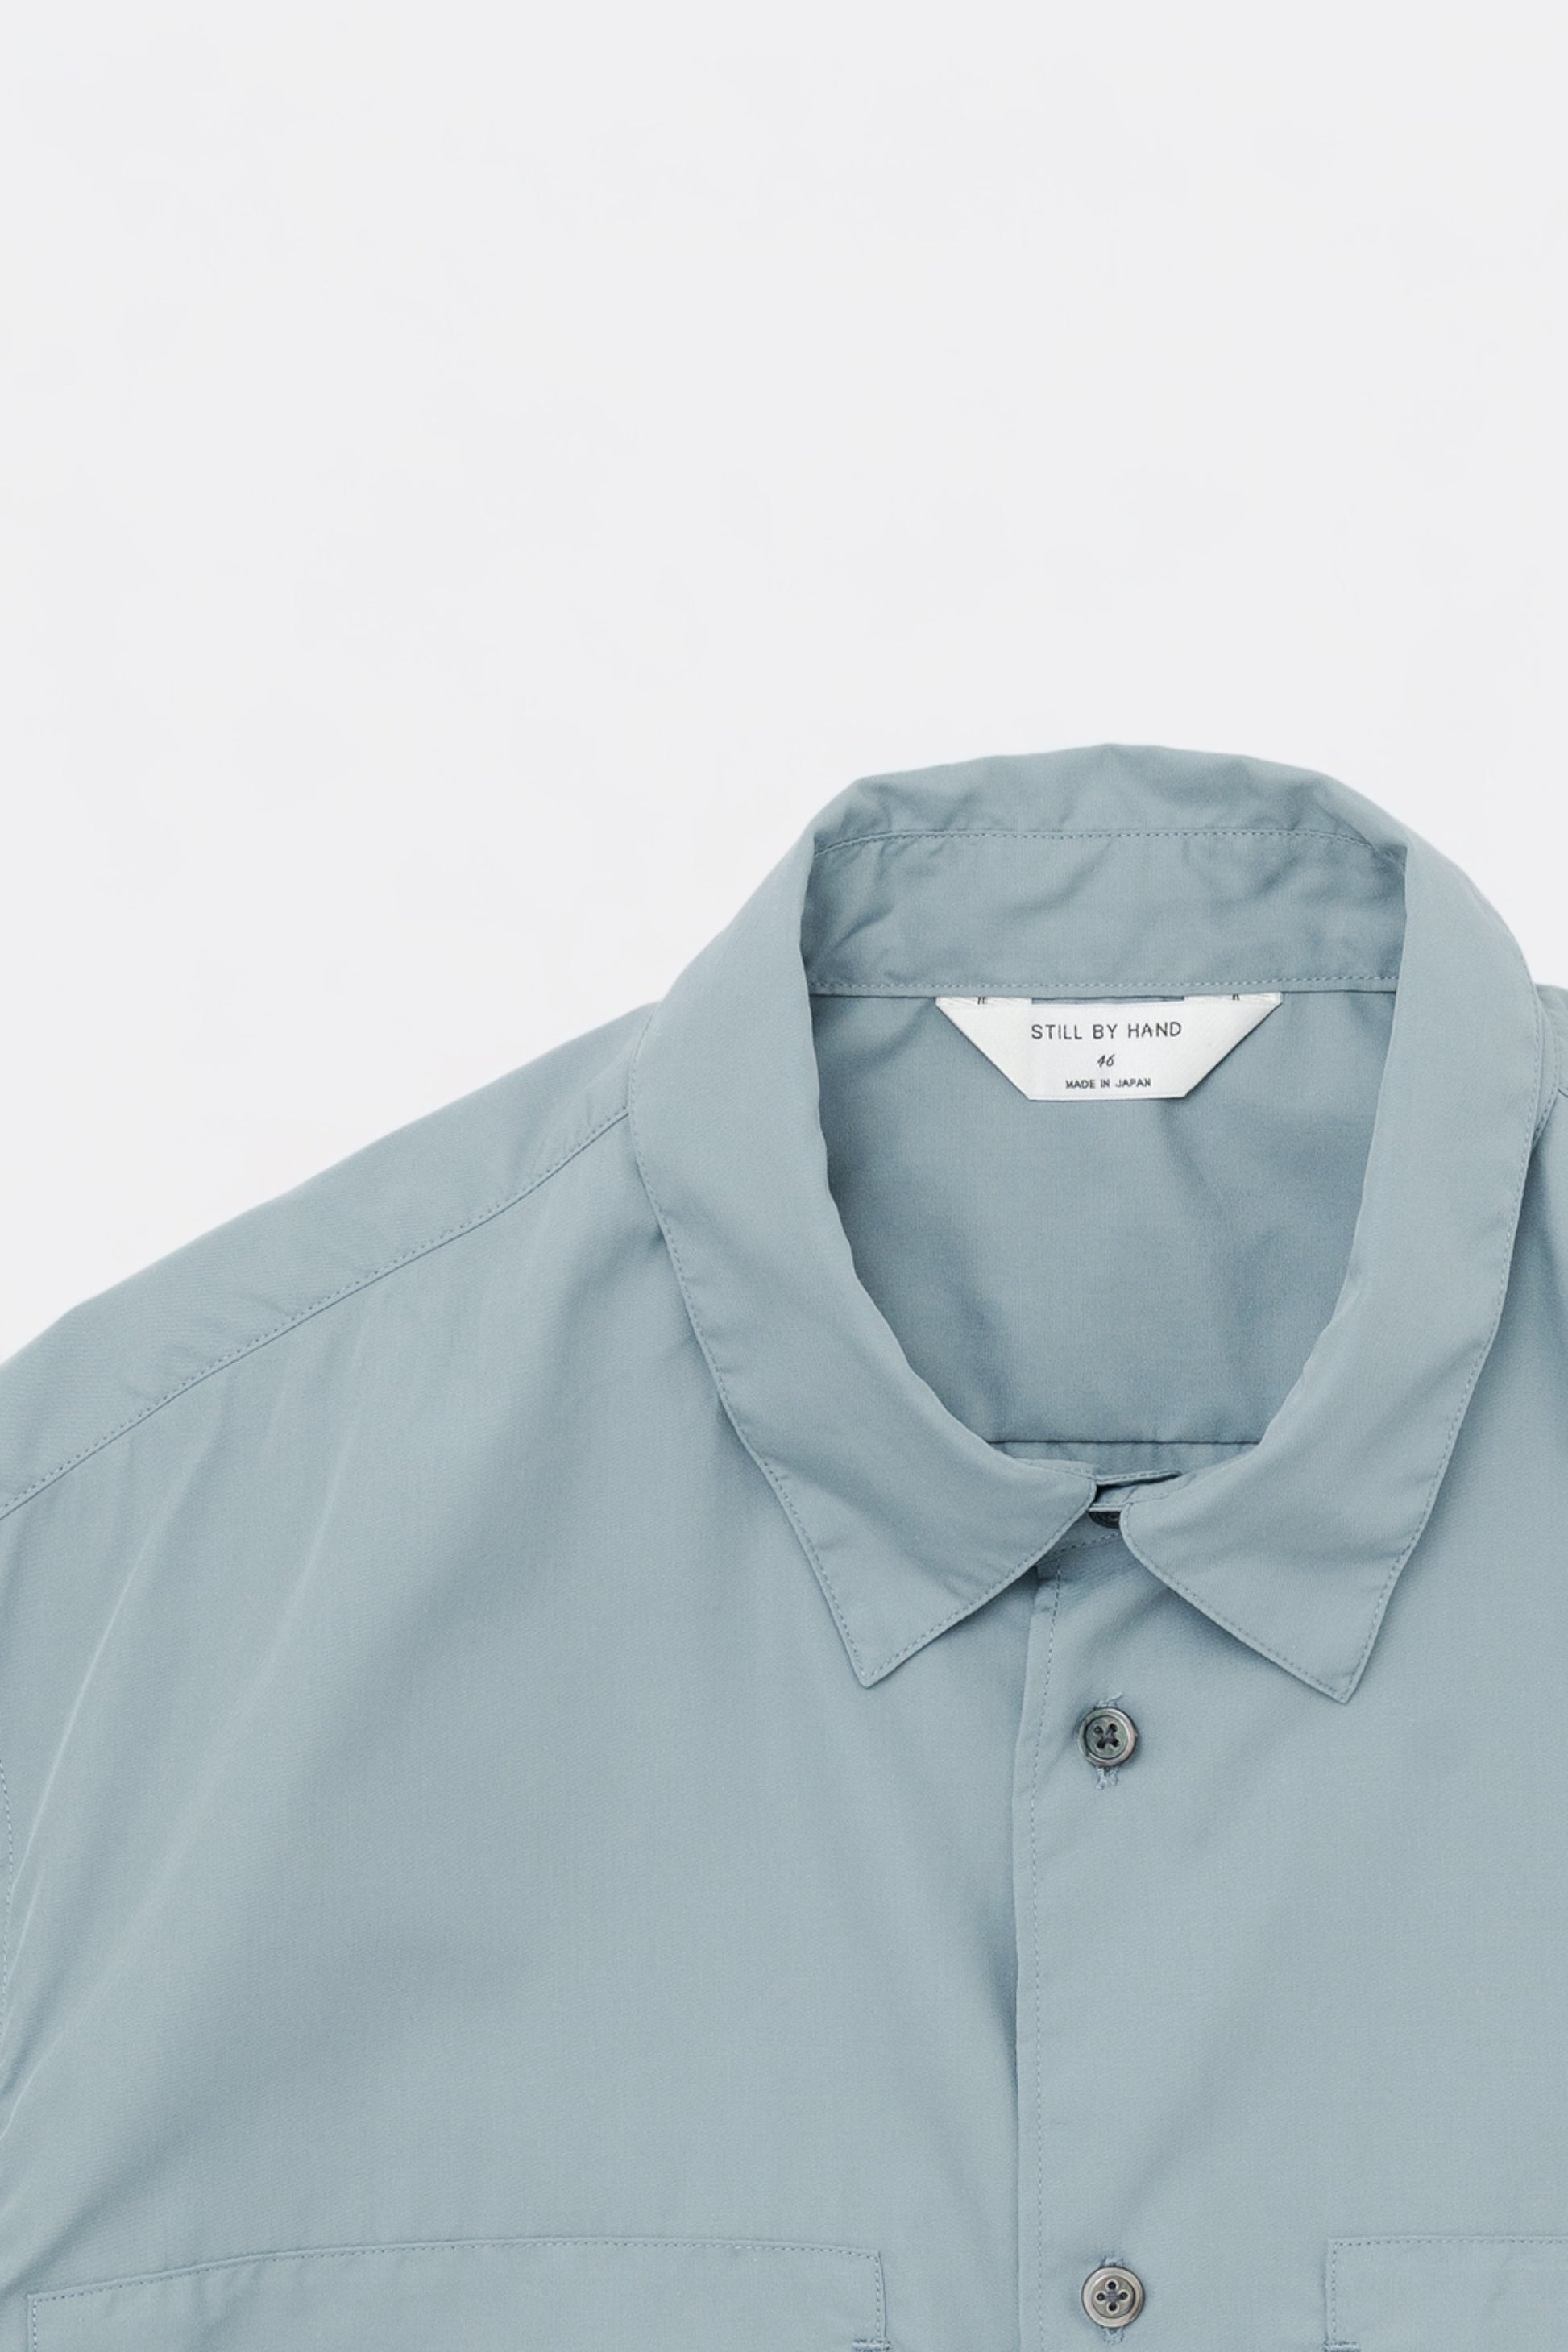 Still By Hand - Double Pocket Shirt (Blue Grey)